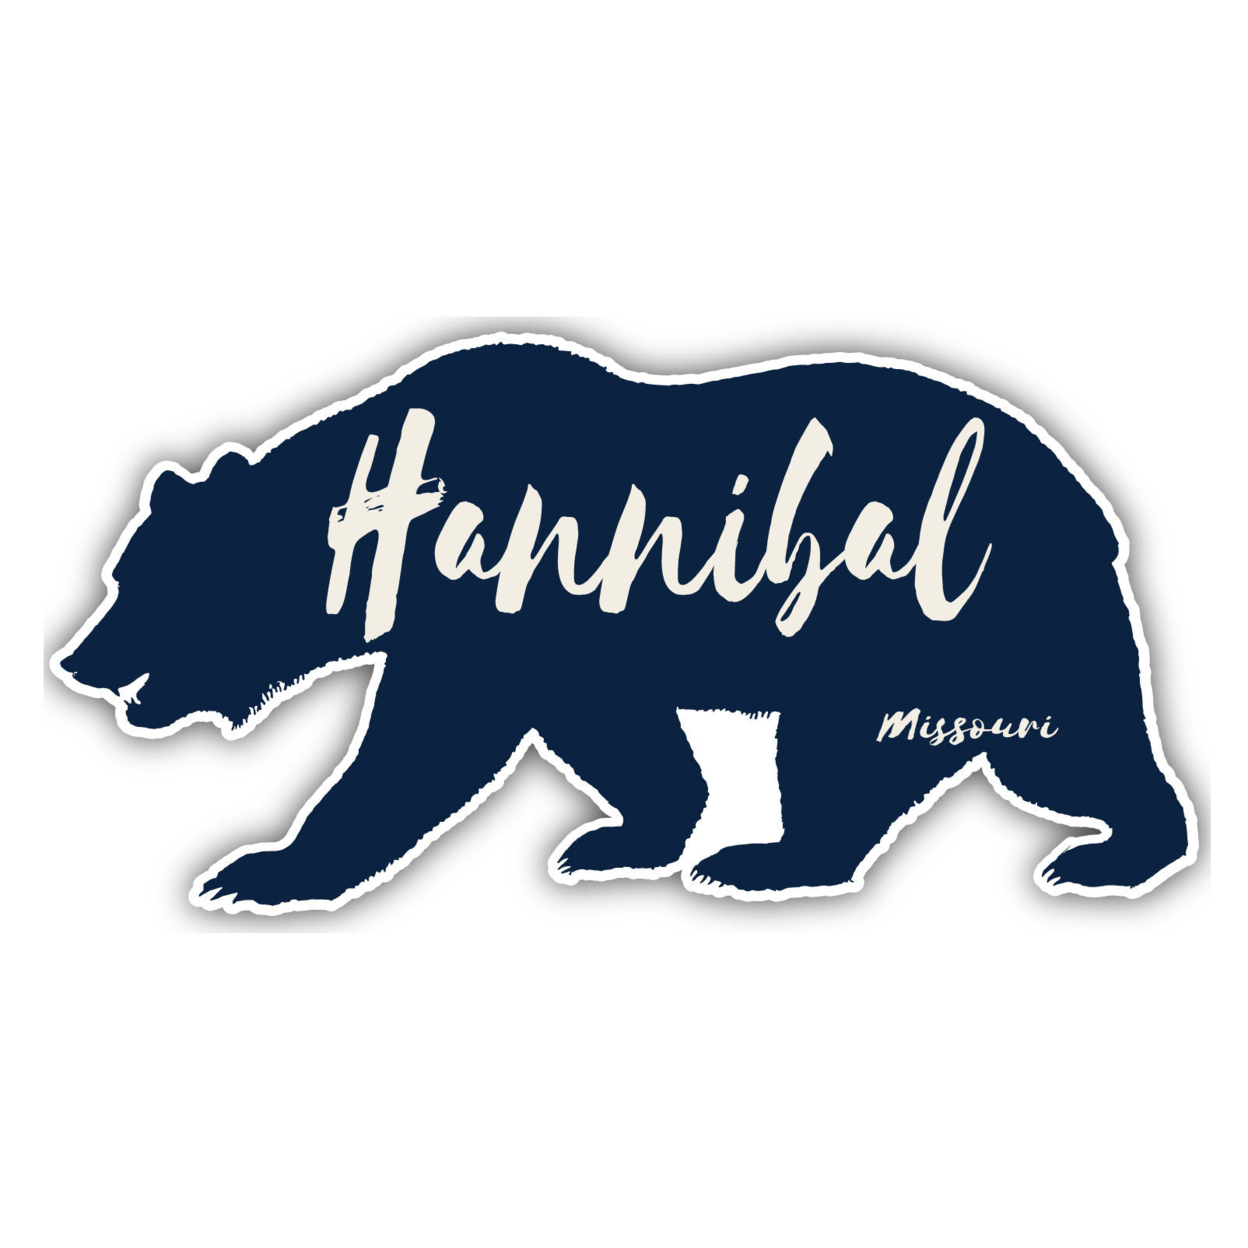 Hannibal Missouri Souvenir Decorative Stickers (Choose Theme And Size) - 4-Pack, 12-Inch, Bear